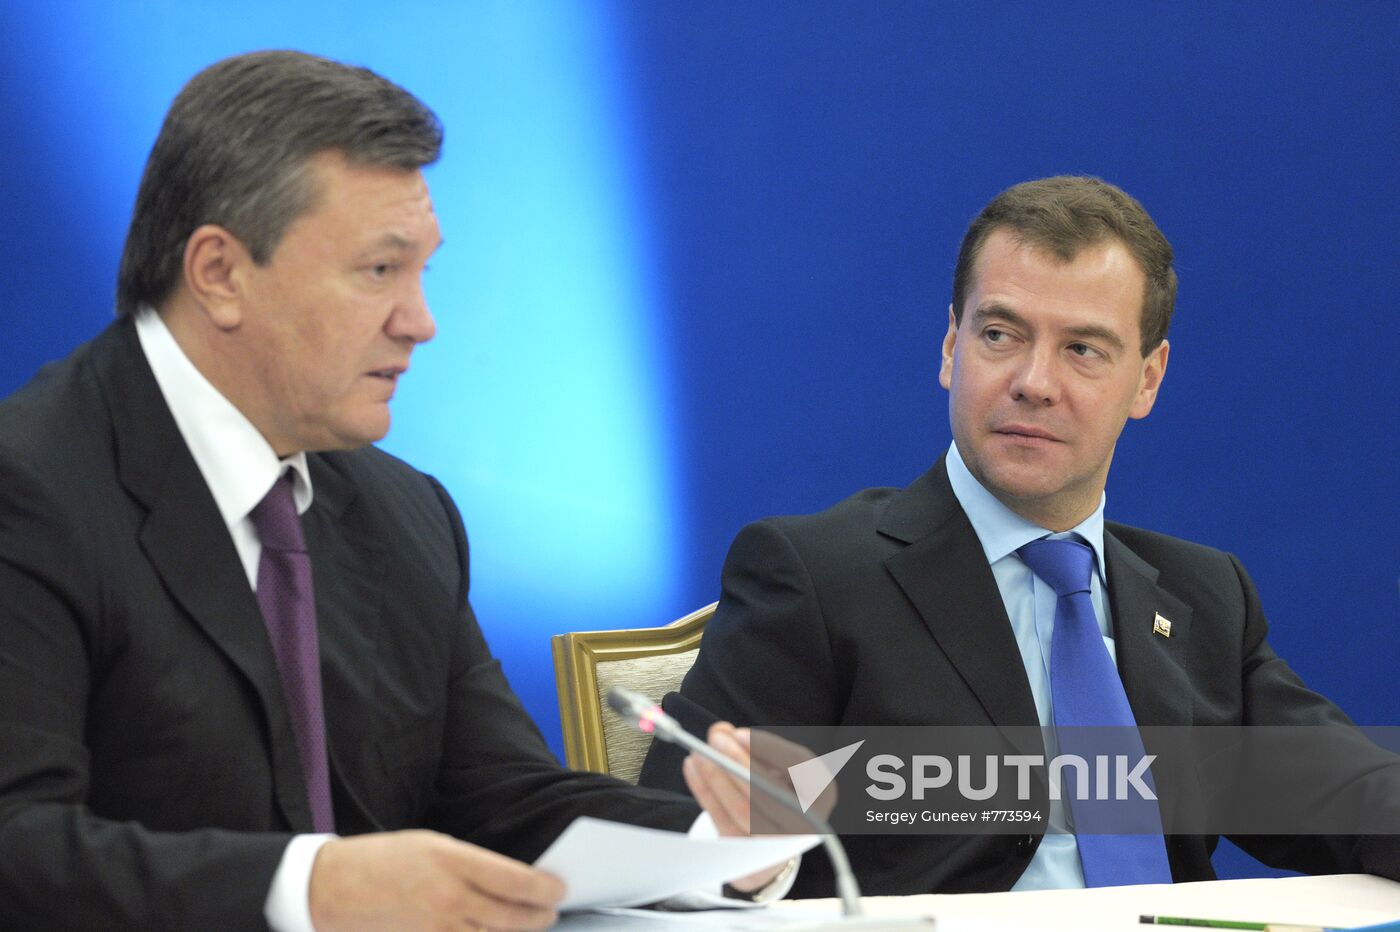 Dmitry Medvedev, Viktor Yanukovich attend Gelendzhik forum